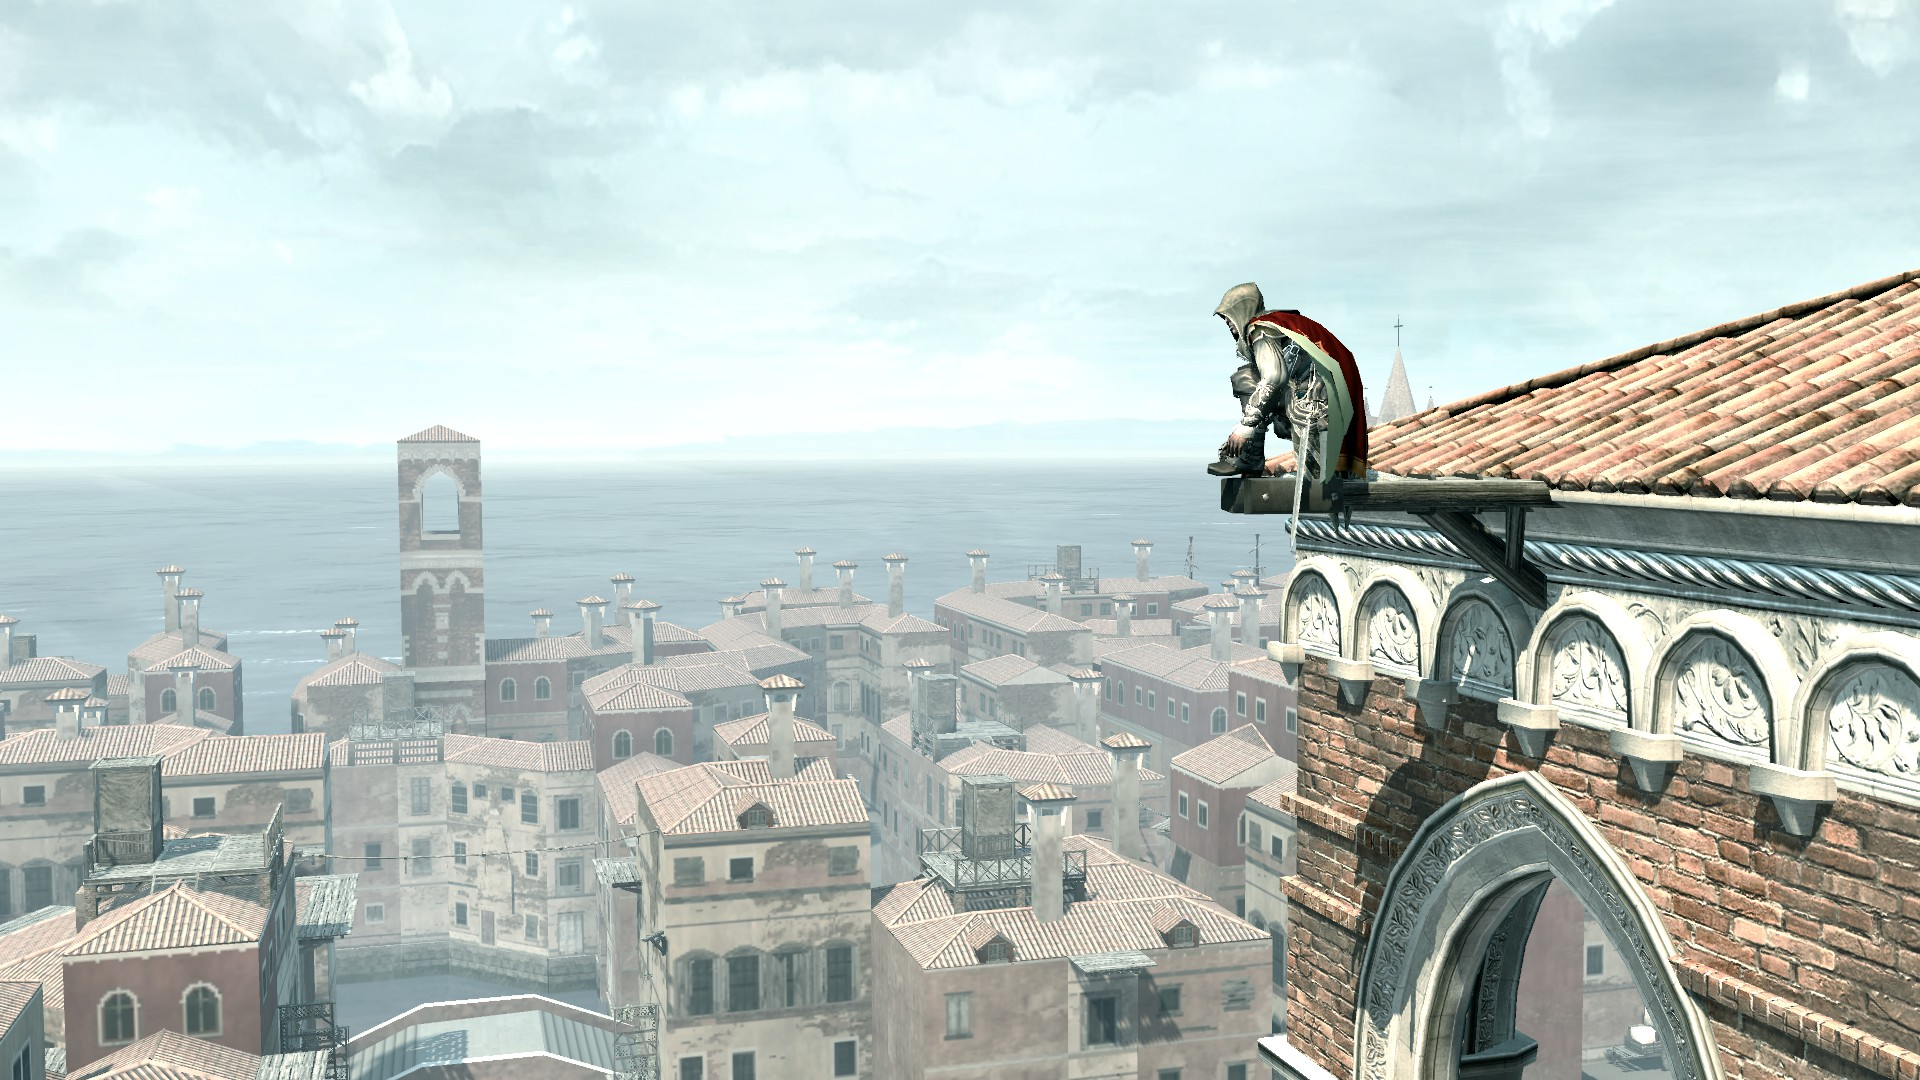 Ezio over an Italian city